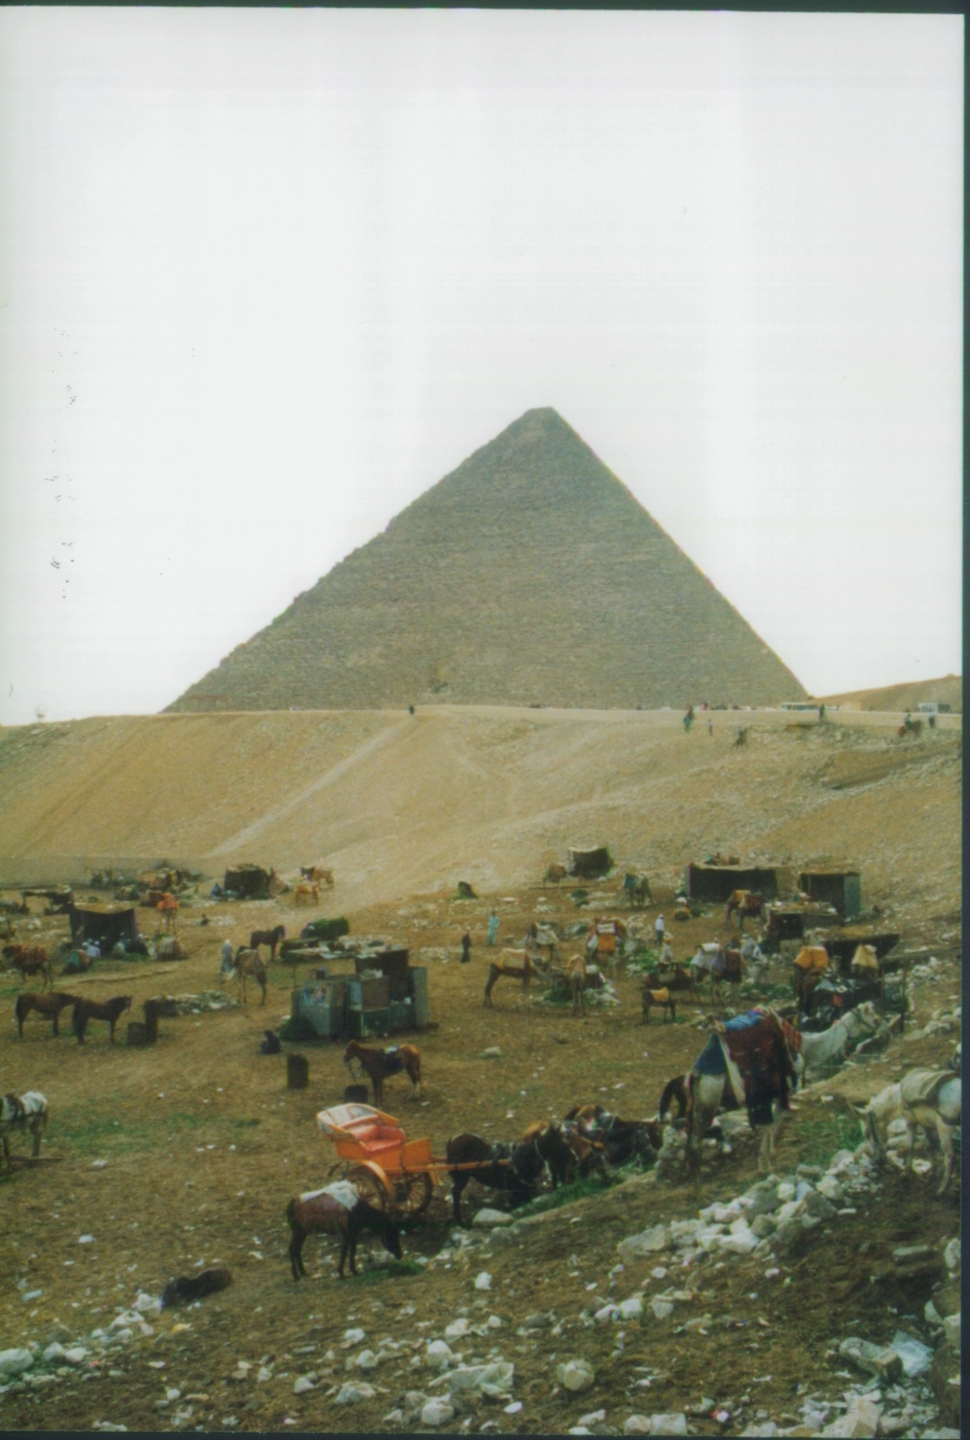 Animal Area at Pyramids of Giza Egypt 1998